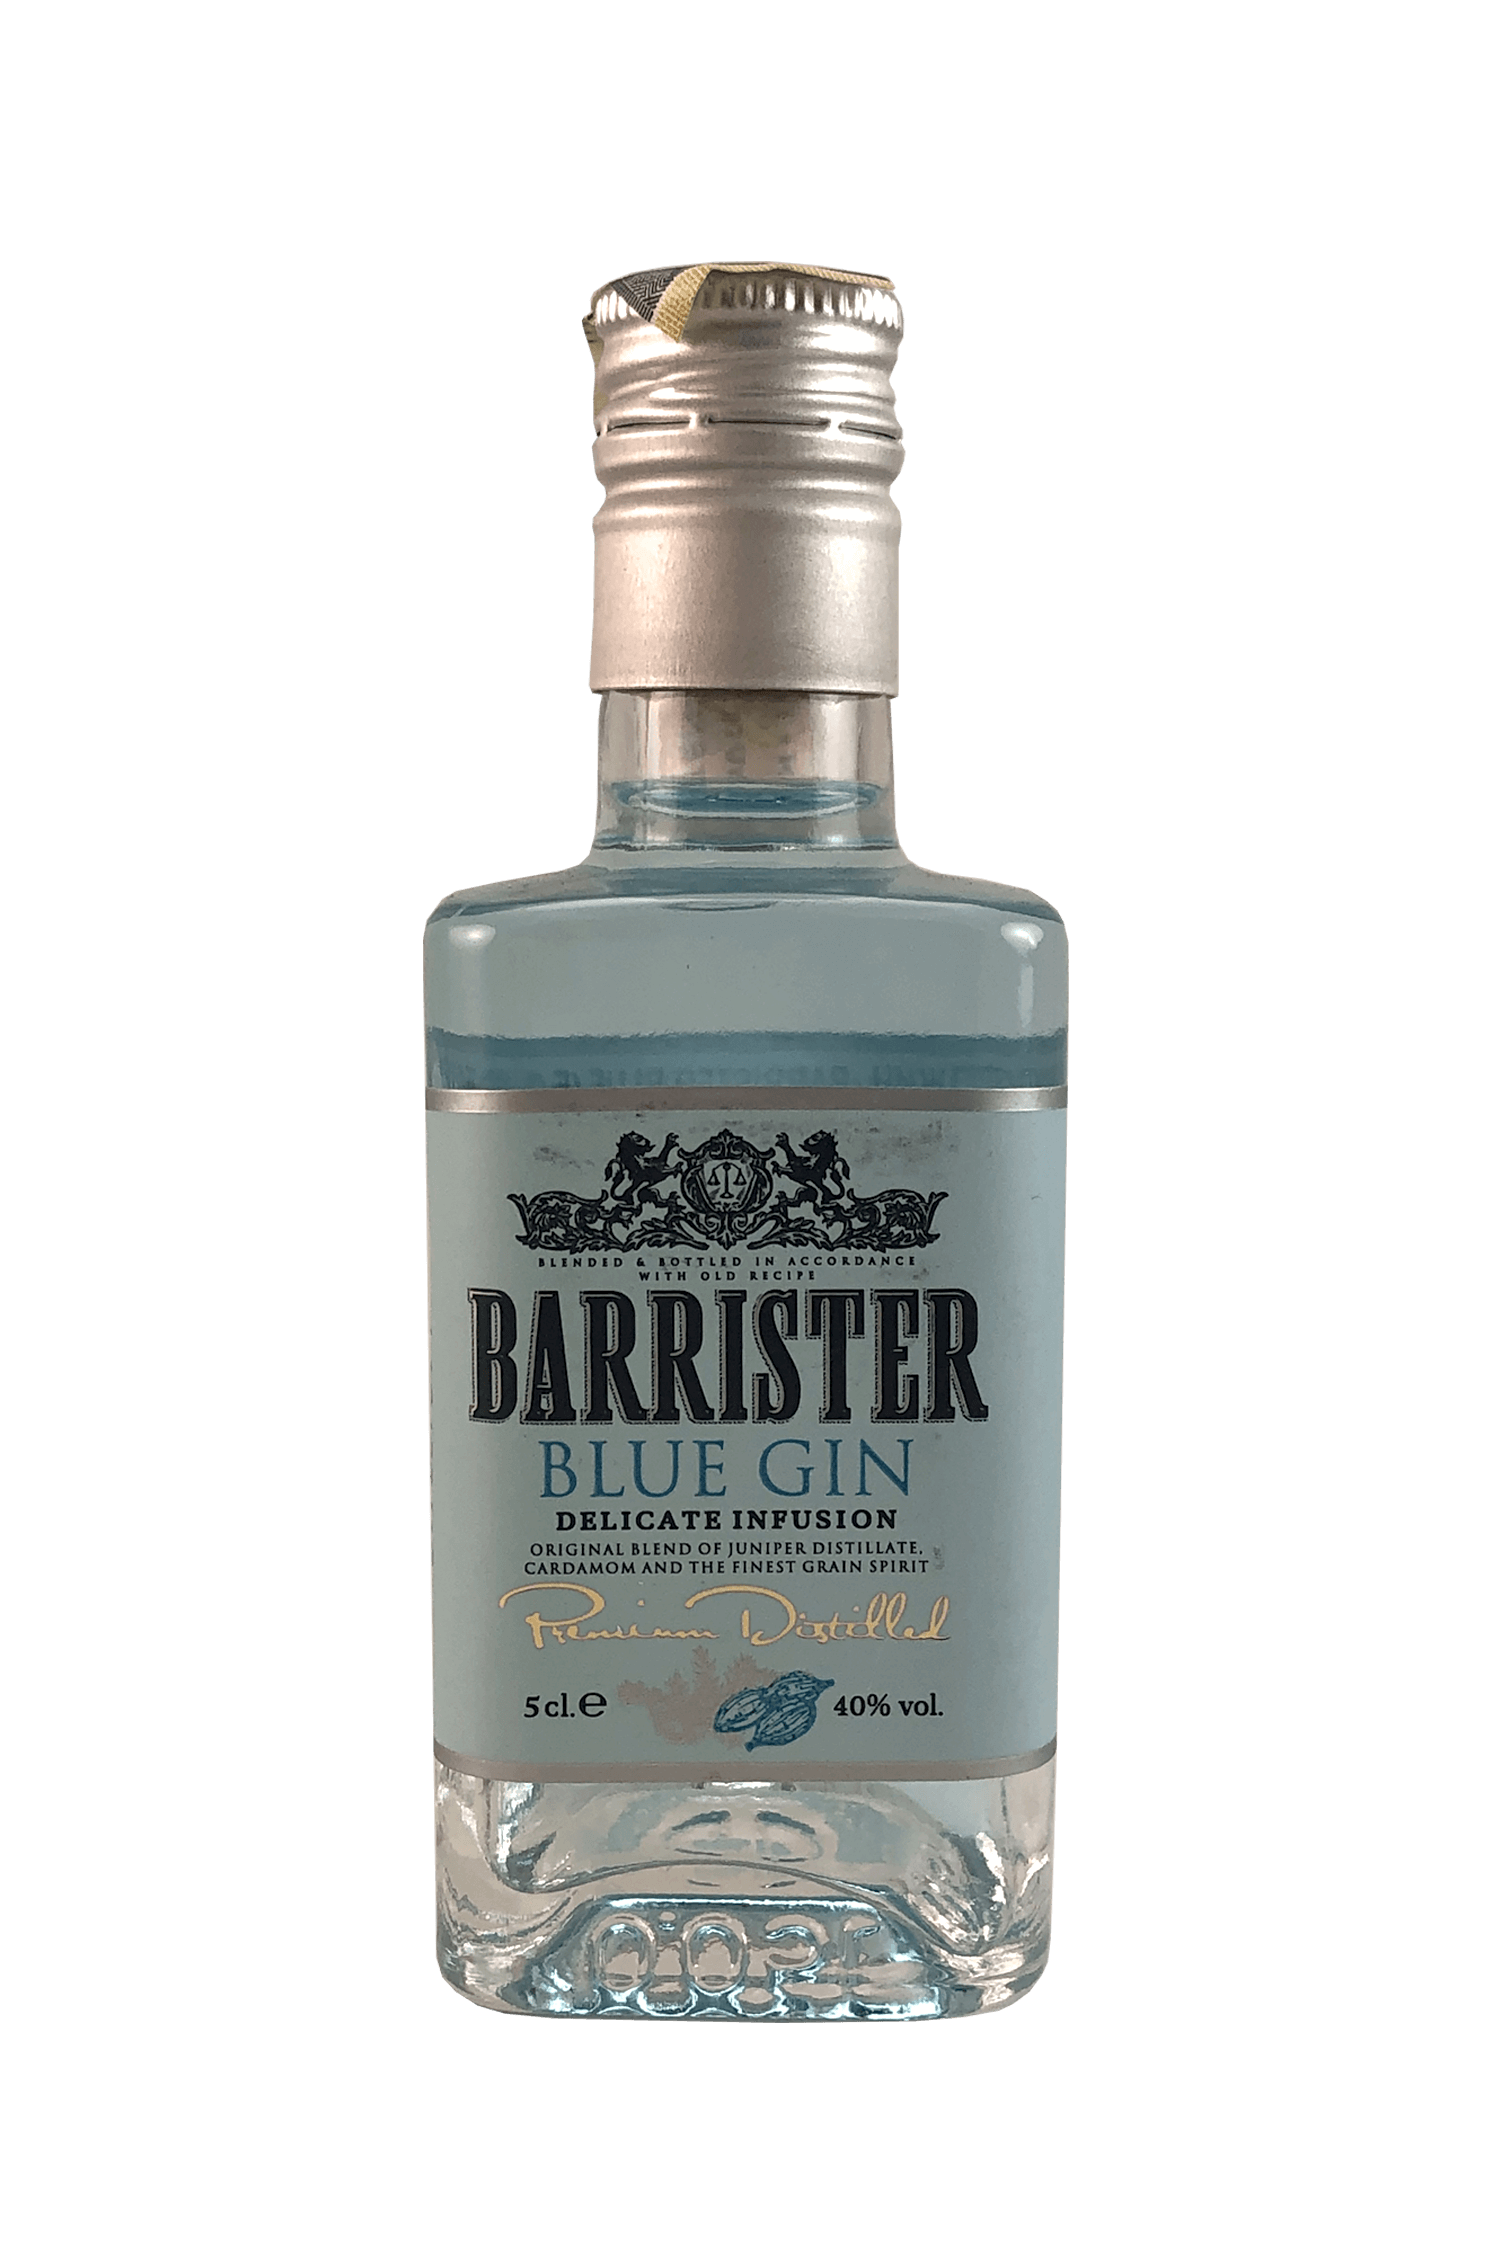 Barrister Blue Gin